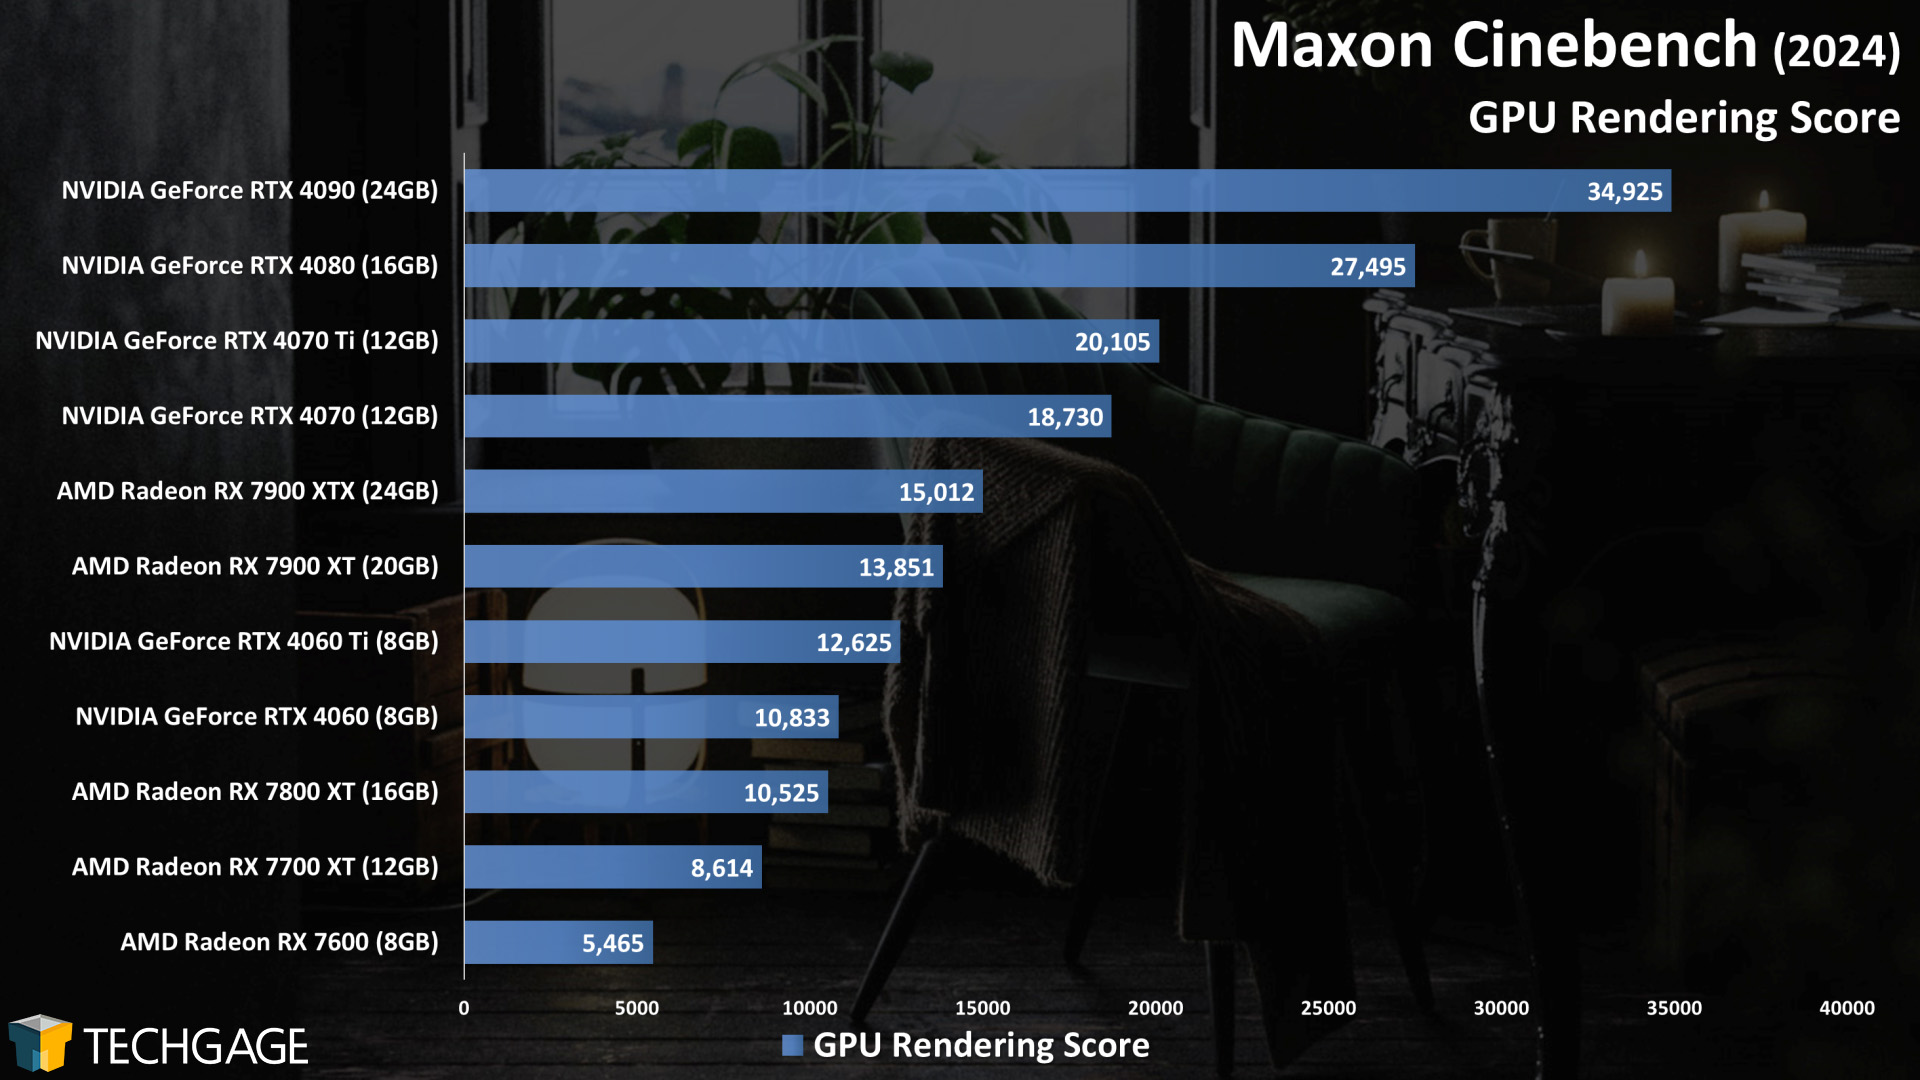 Maxon Cinebench 2024 GPU Rendering Scores